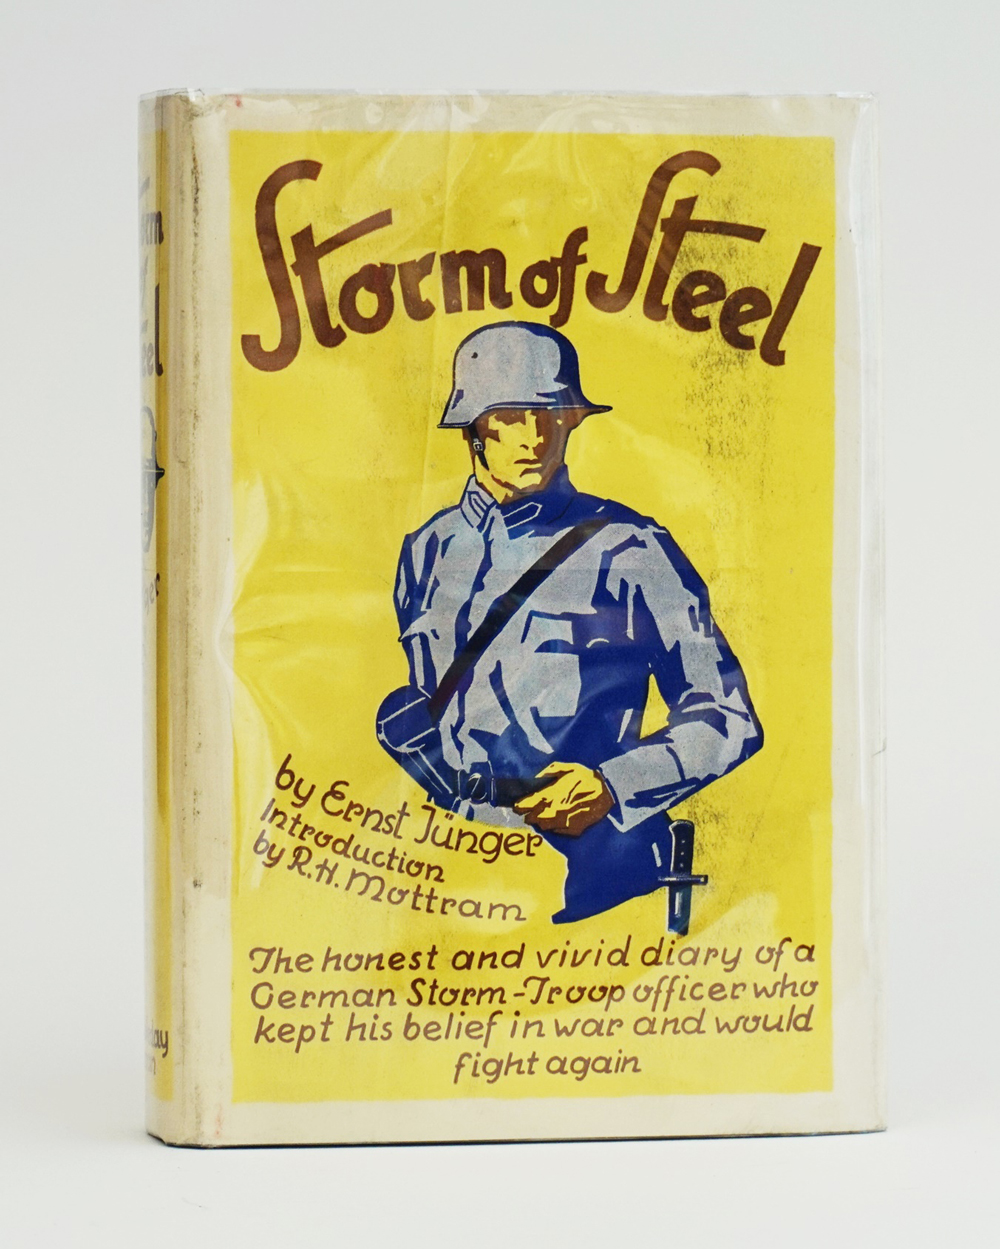 Storm of Steel. New York: Doubleday Doran &amp; Co, 1929.